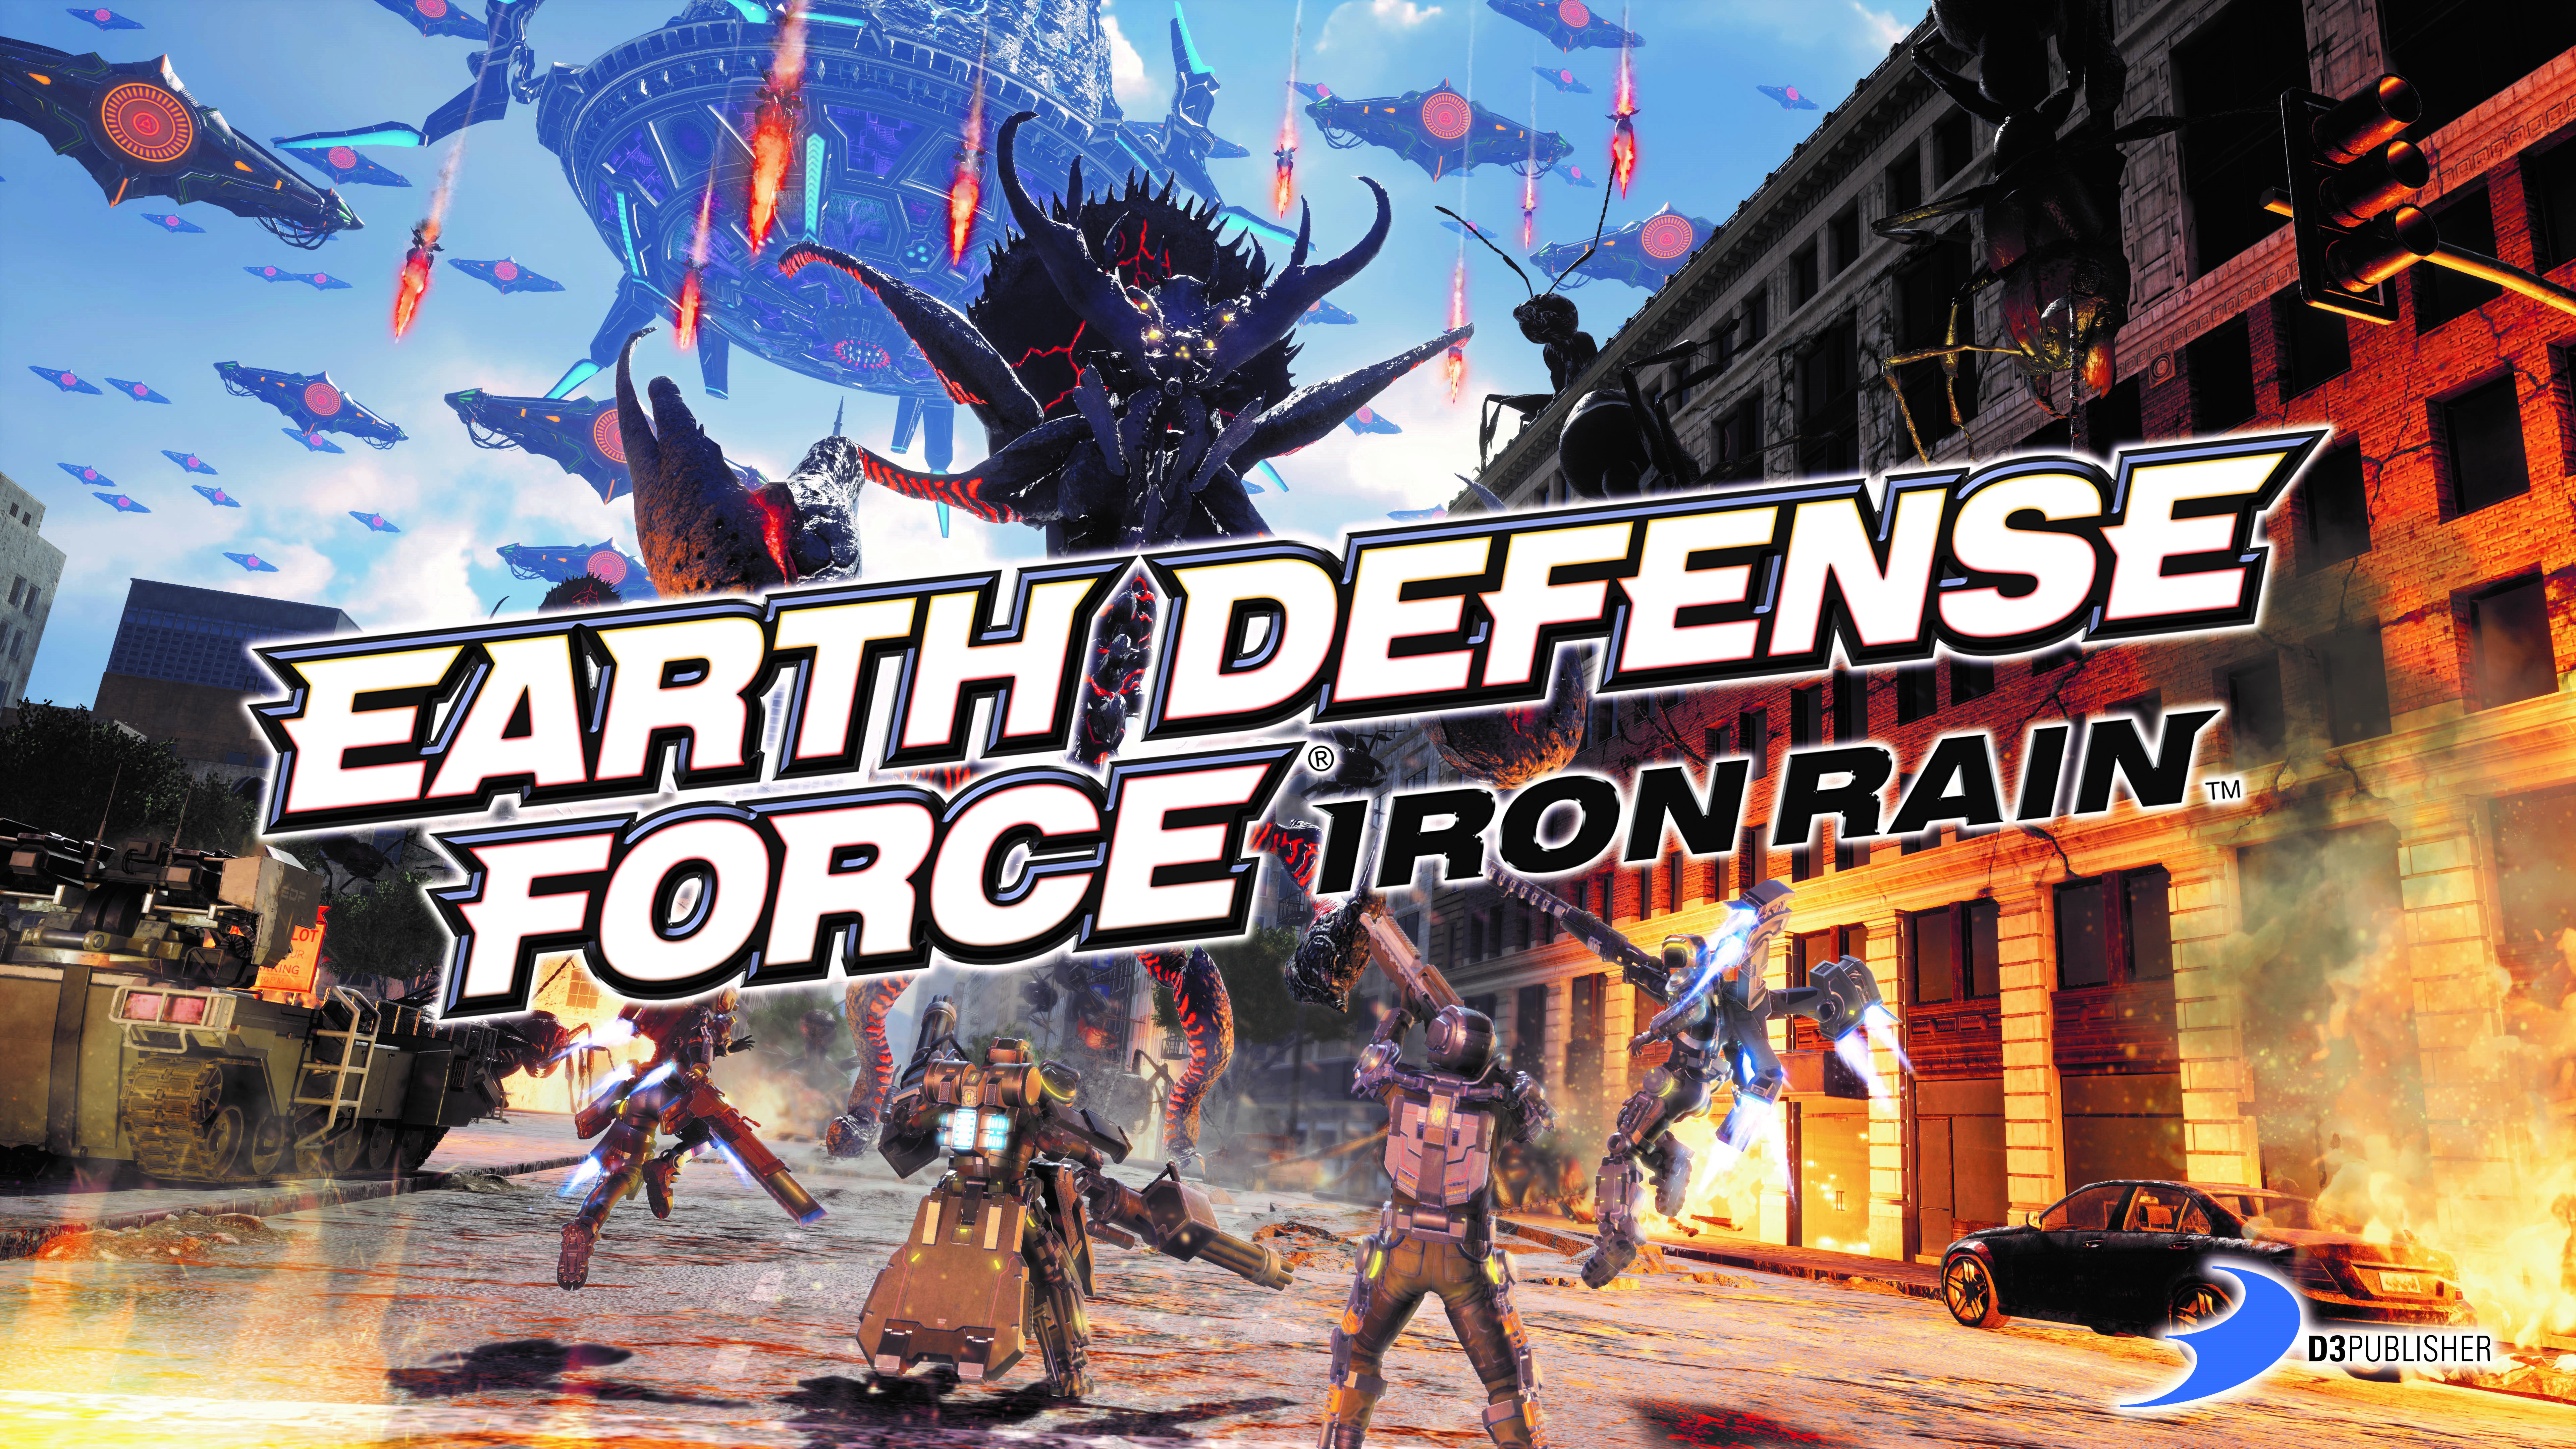 Earth Defense Force Iron Rain (D3 Publisher Inc.)